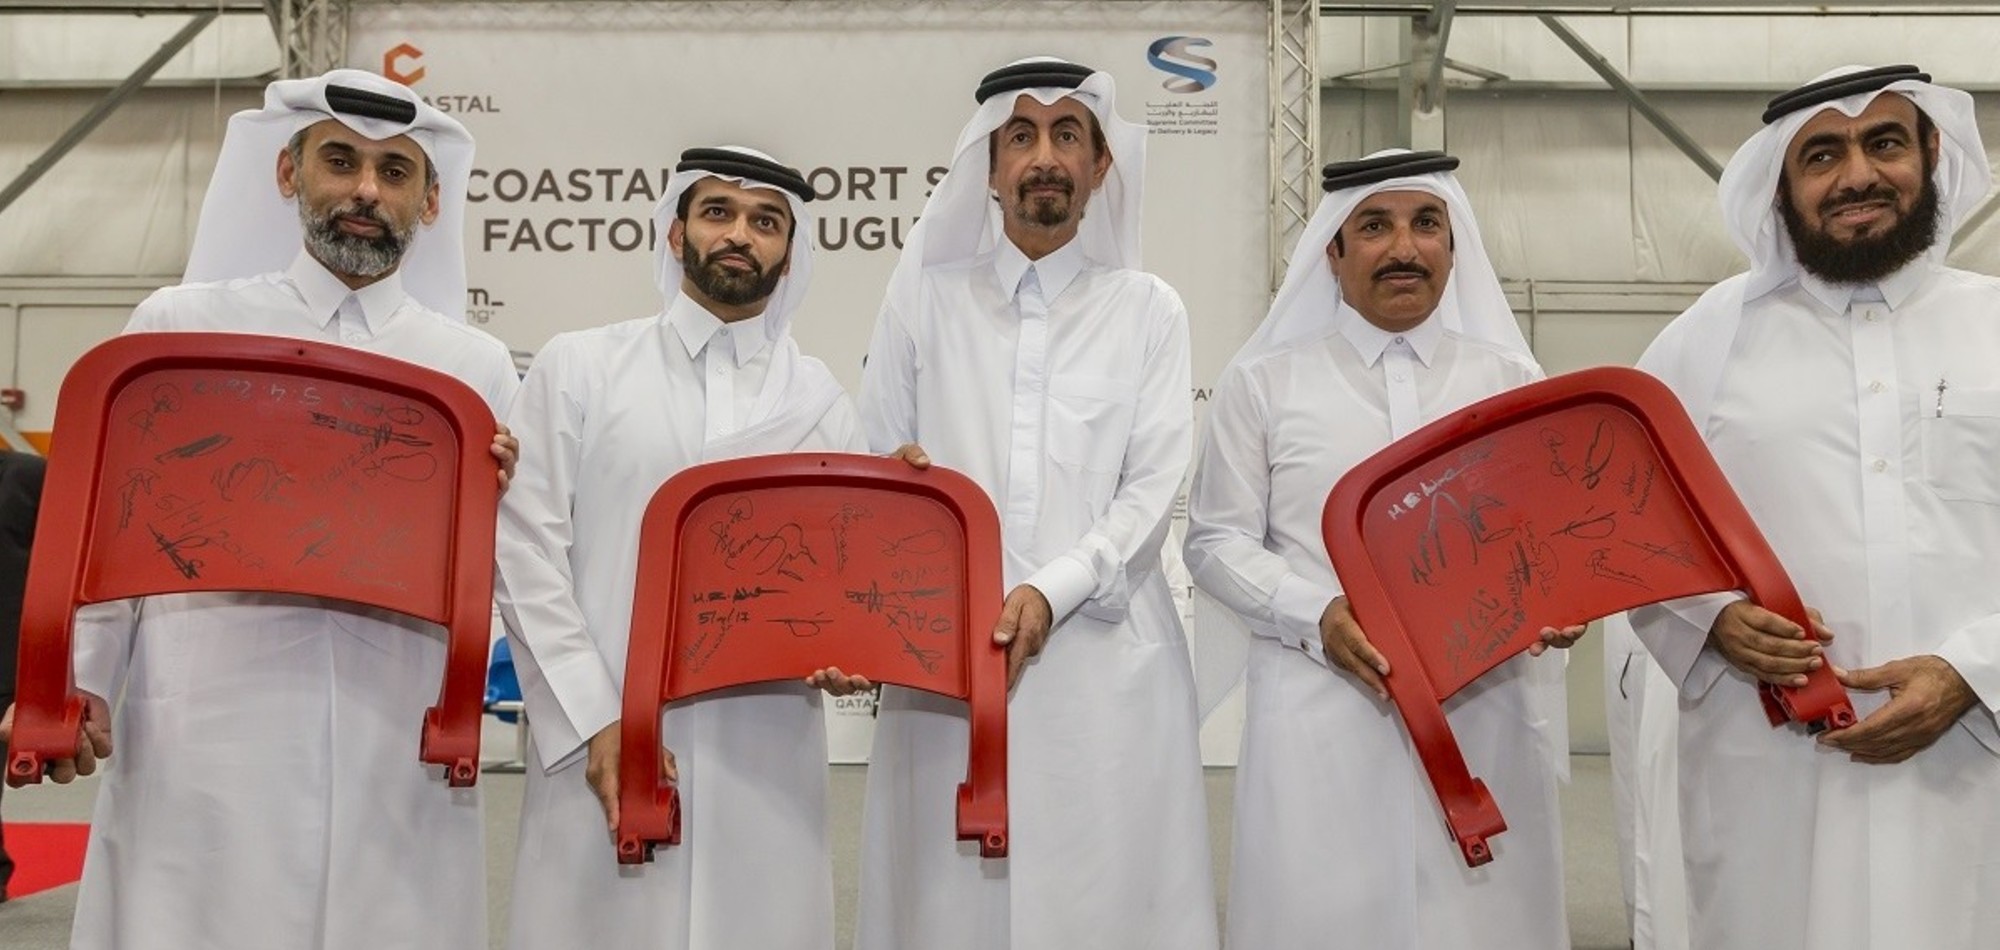 World Cup Qatar 2022 Stadium Seats To Feature "Made in Qatar" Logo